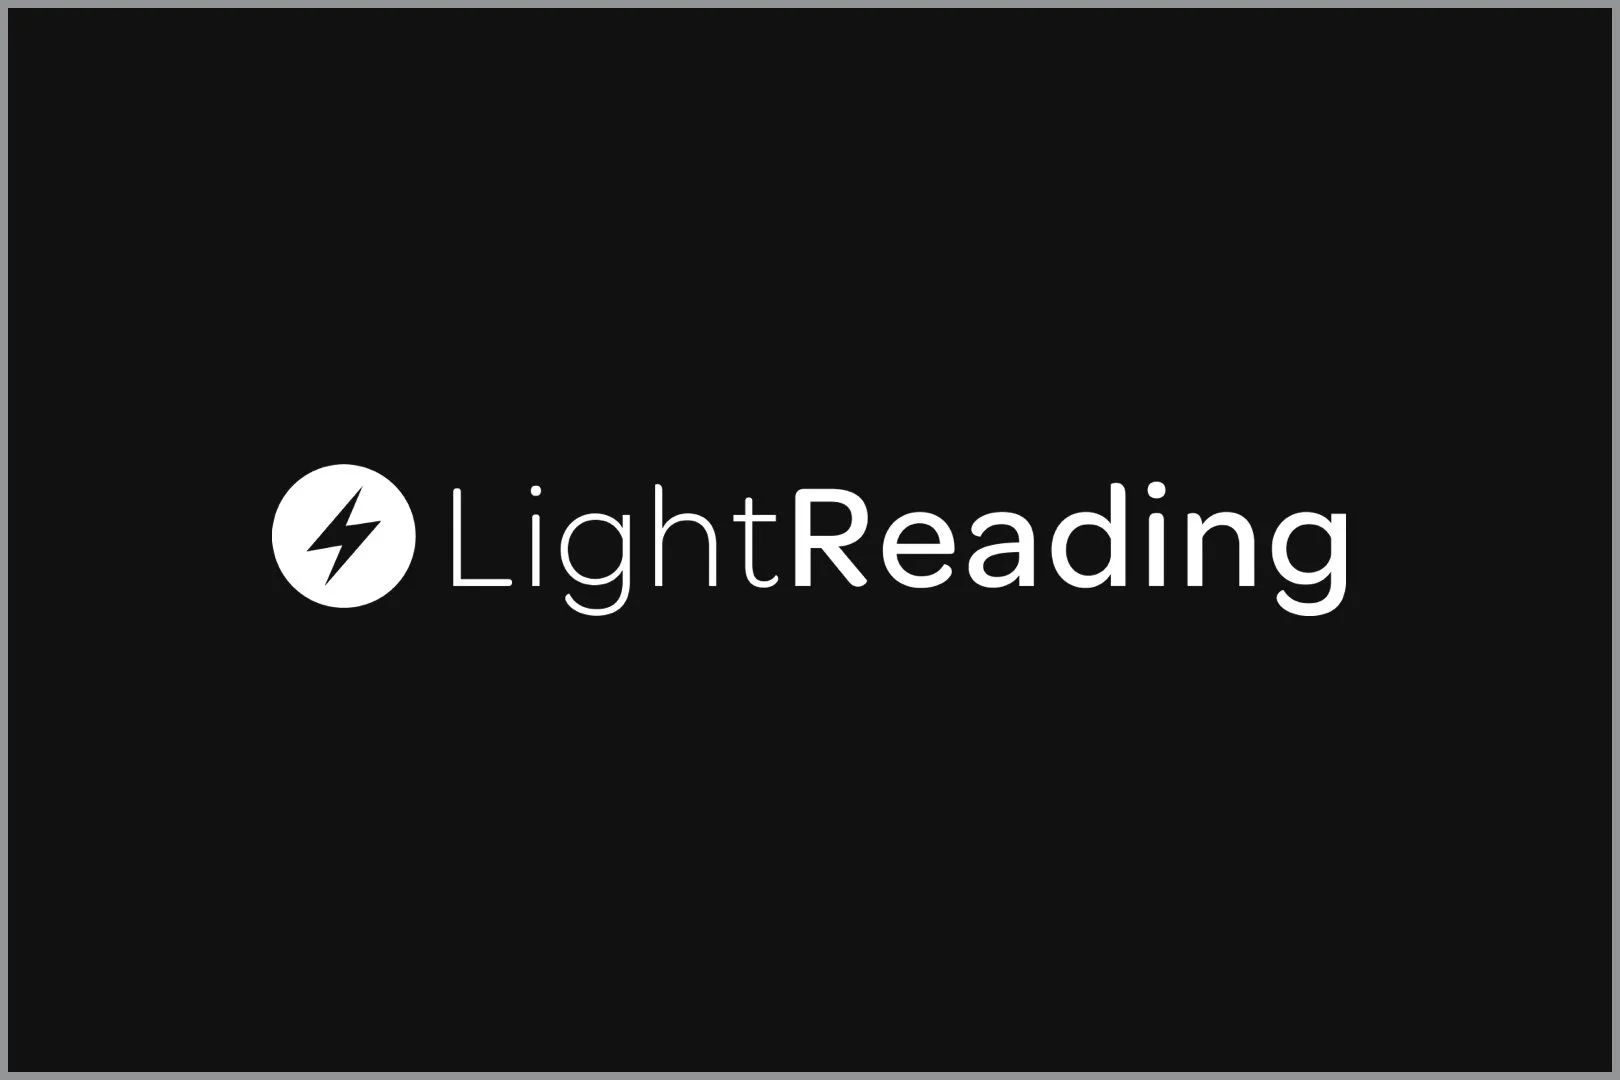 Light Reading logo